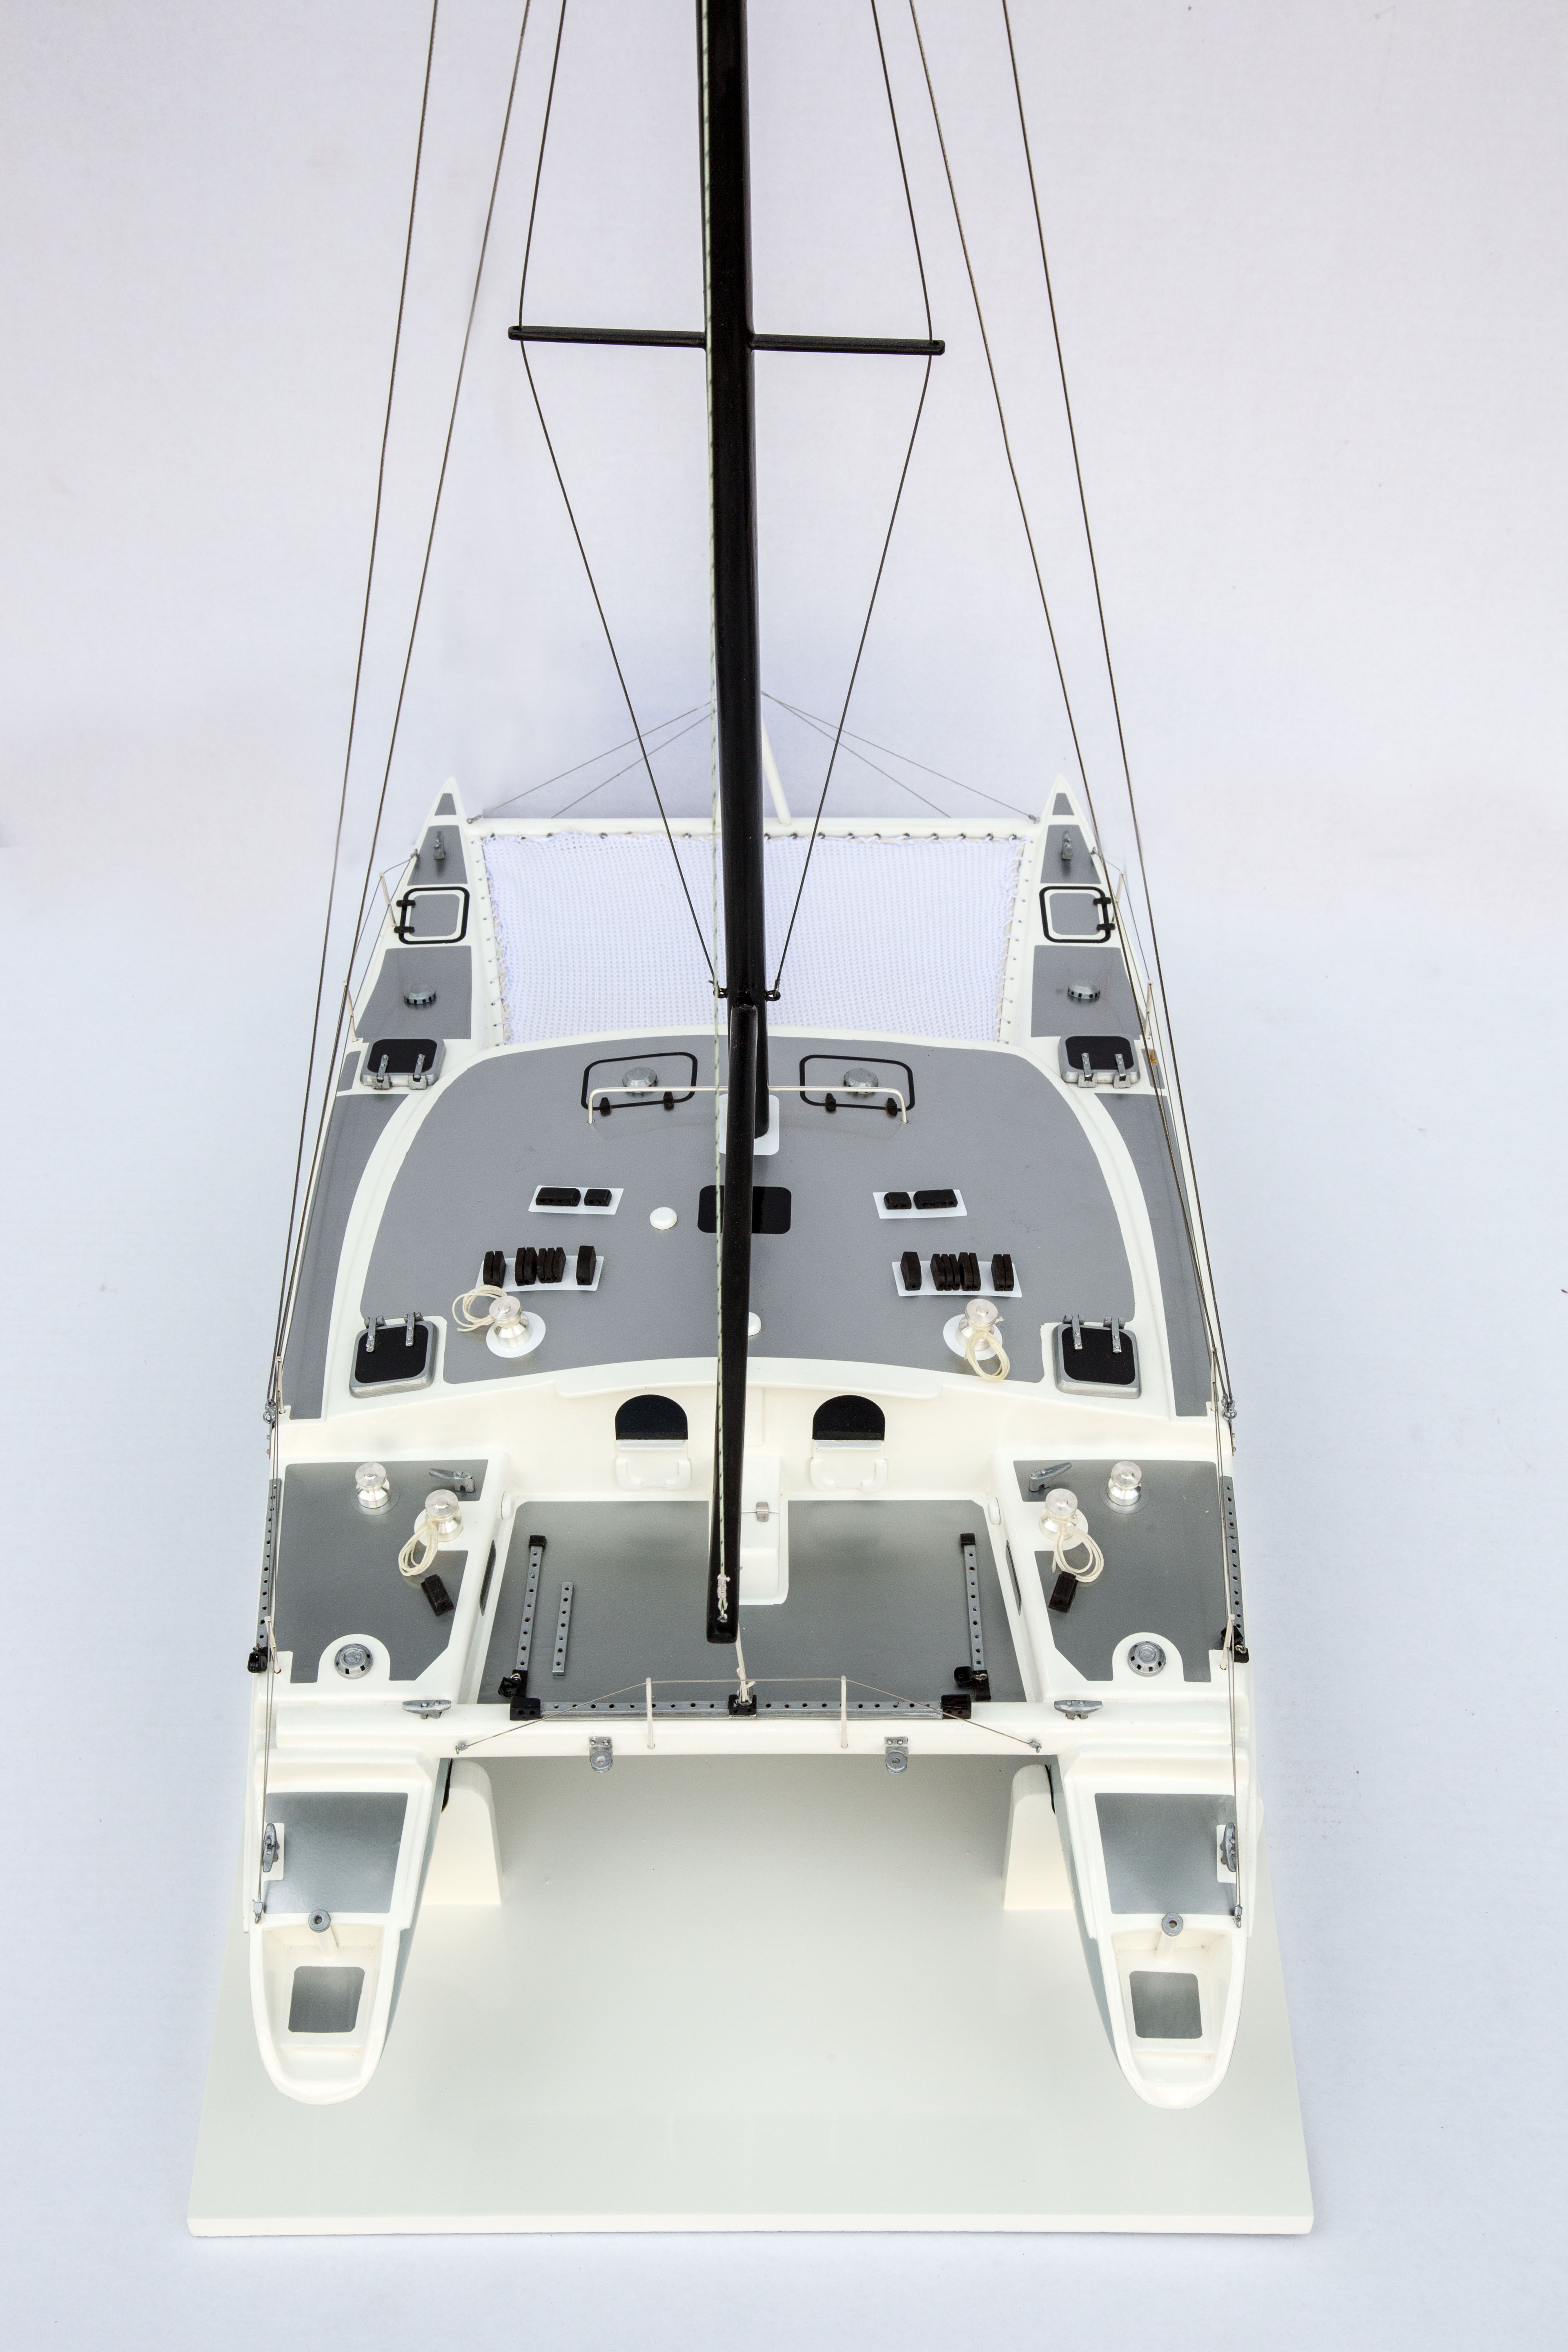 Cite D'Aleth Catamaran Model - HM